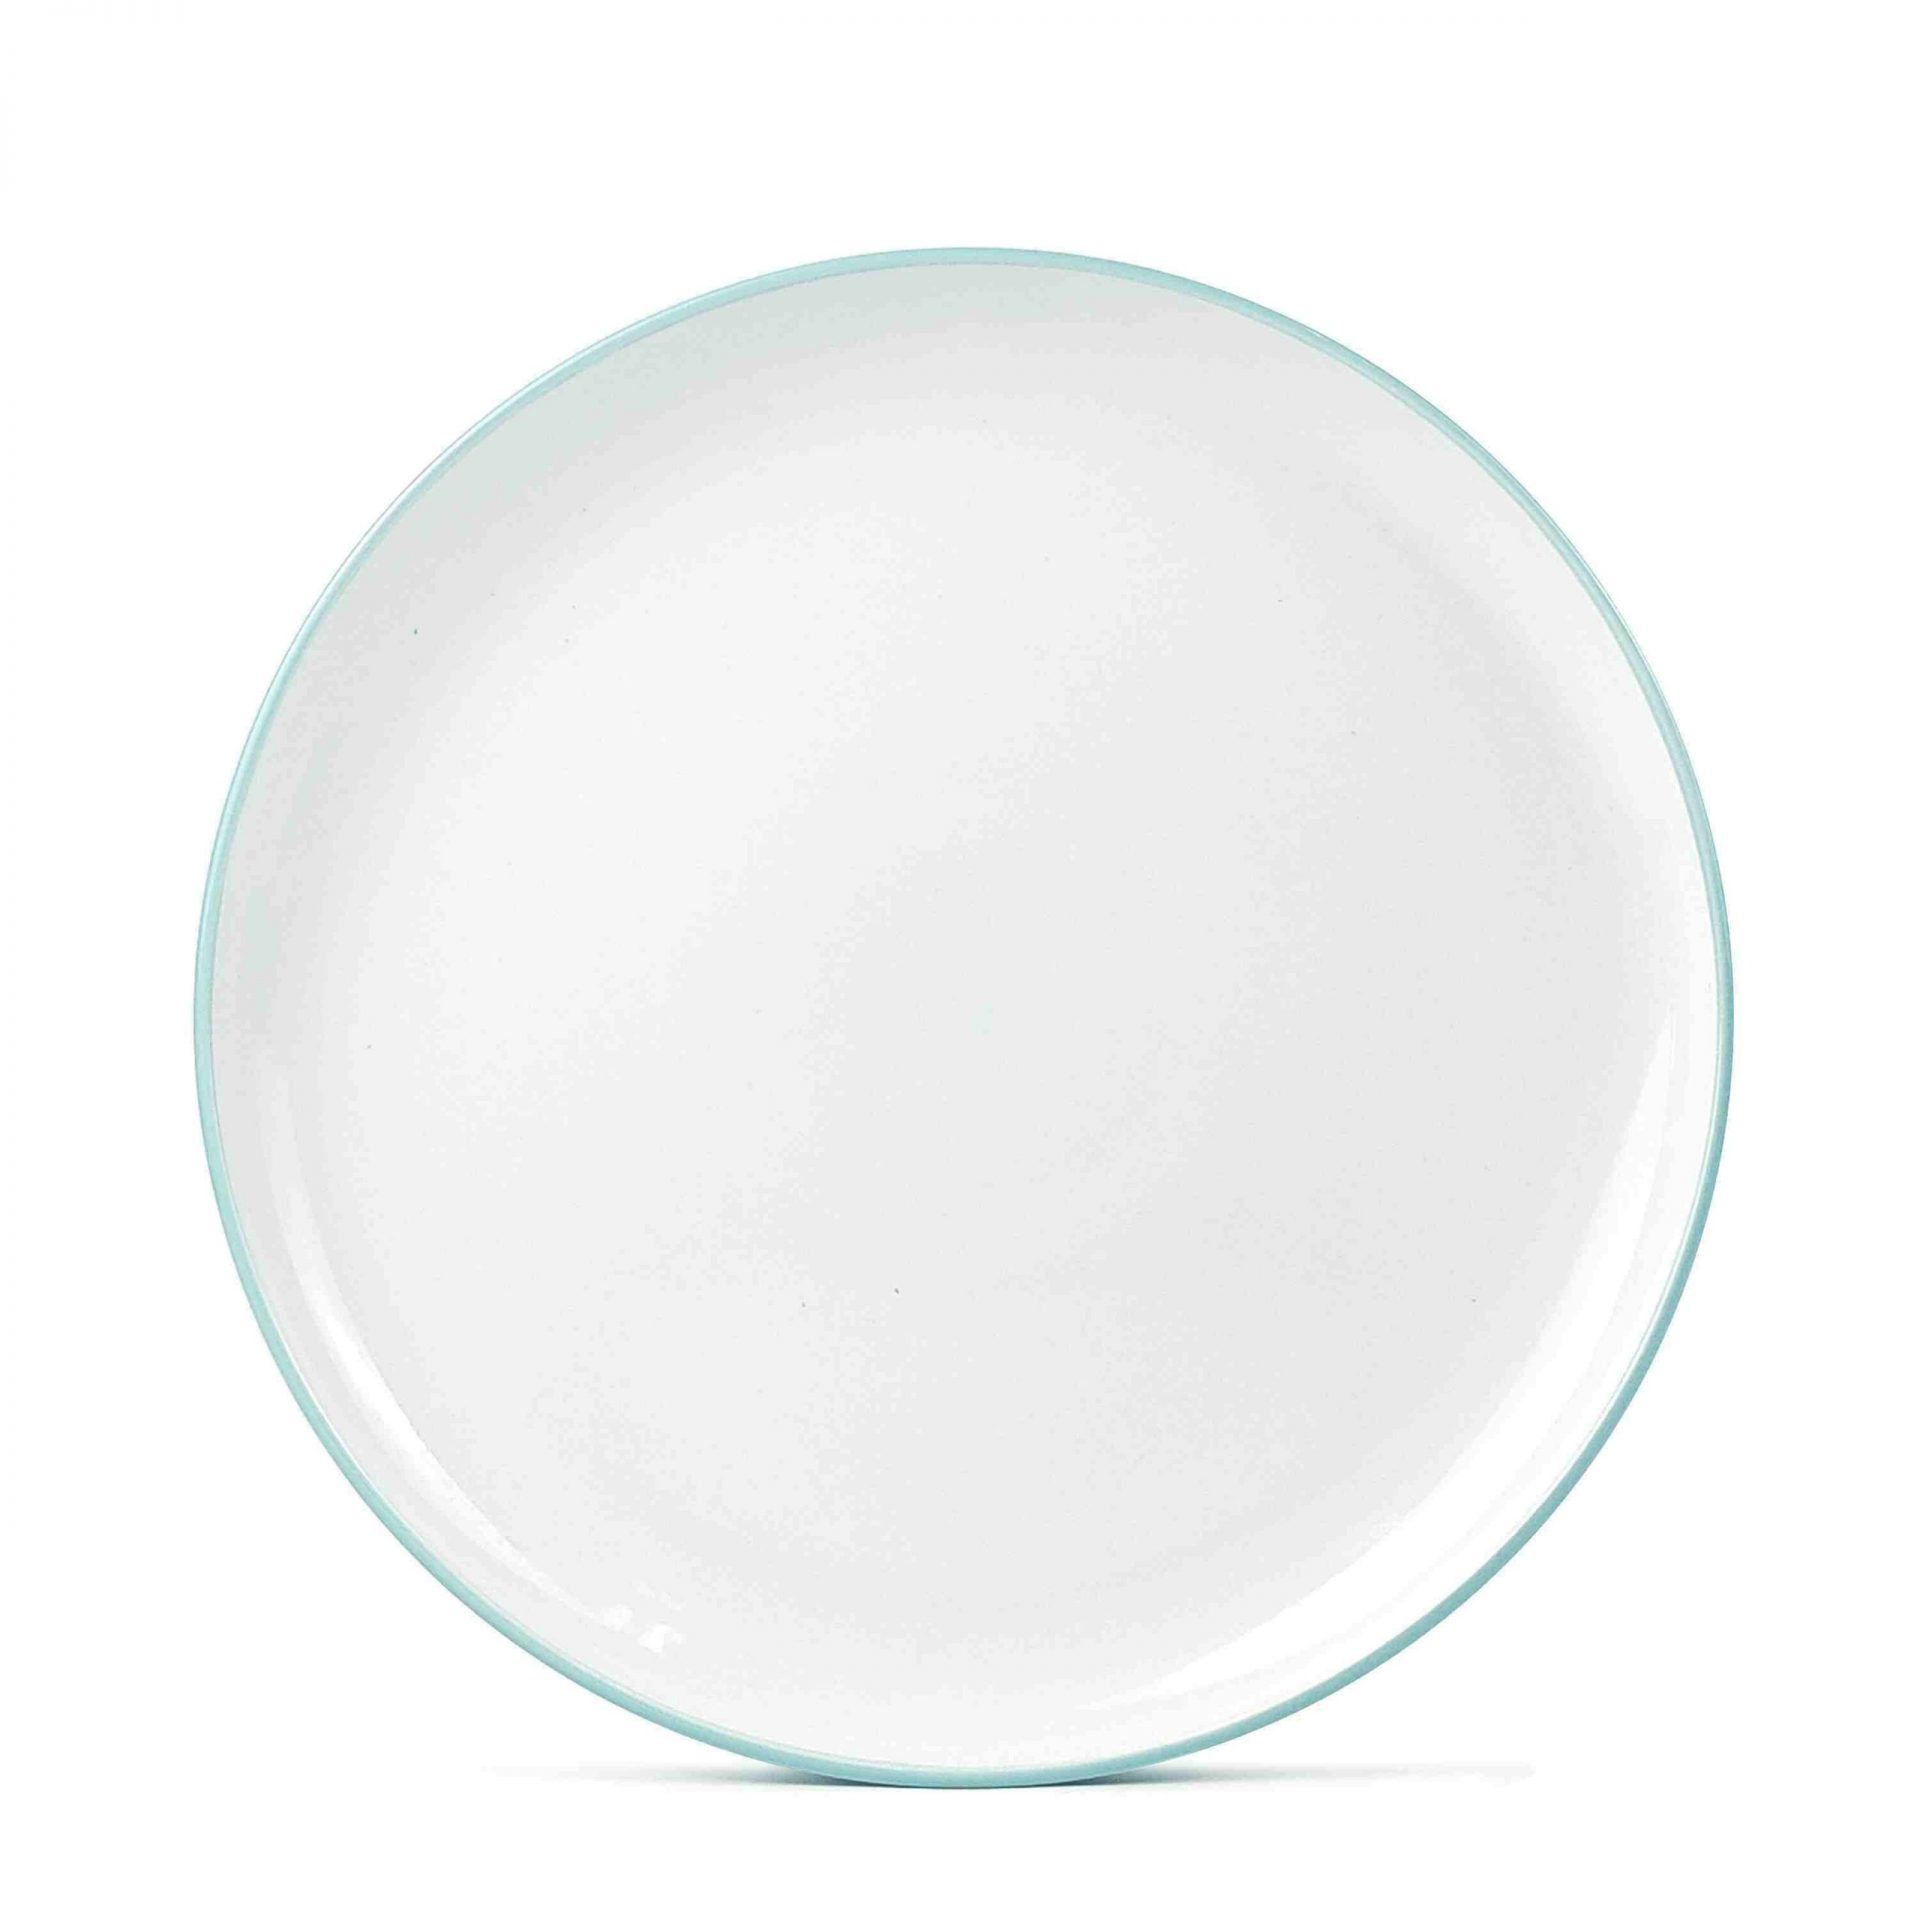 2 tone stoneware dinner plate